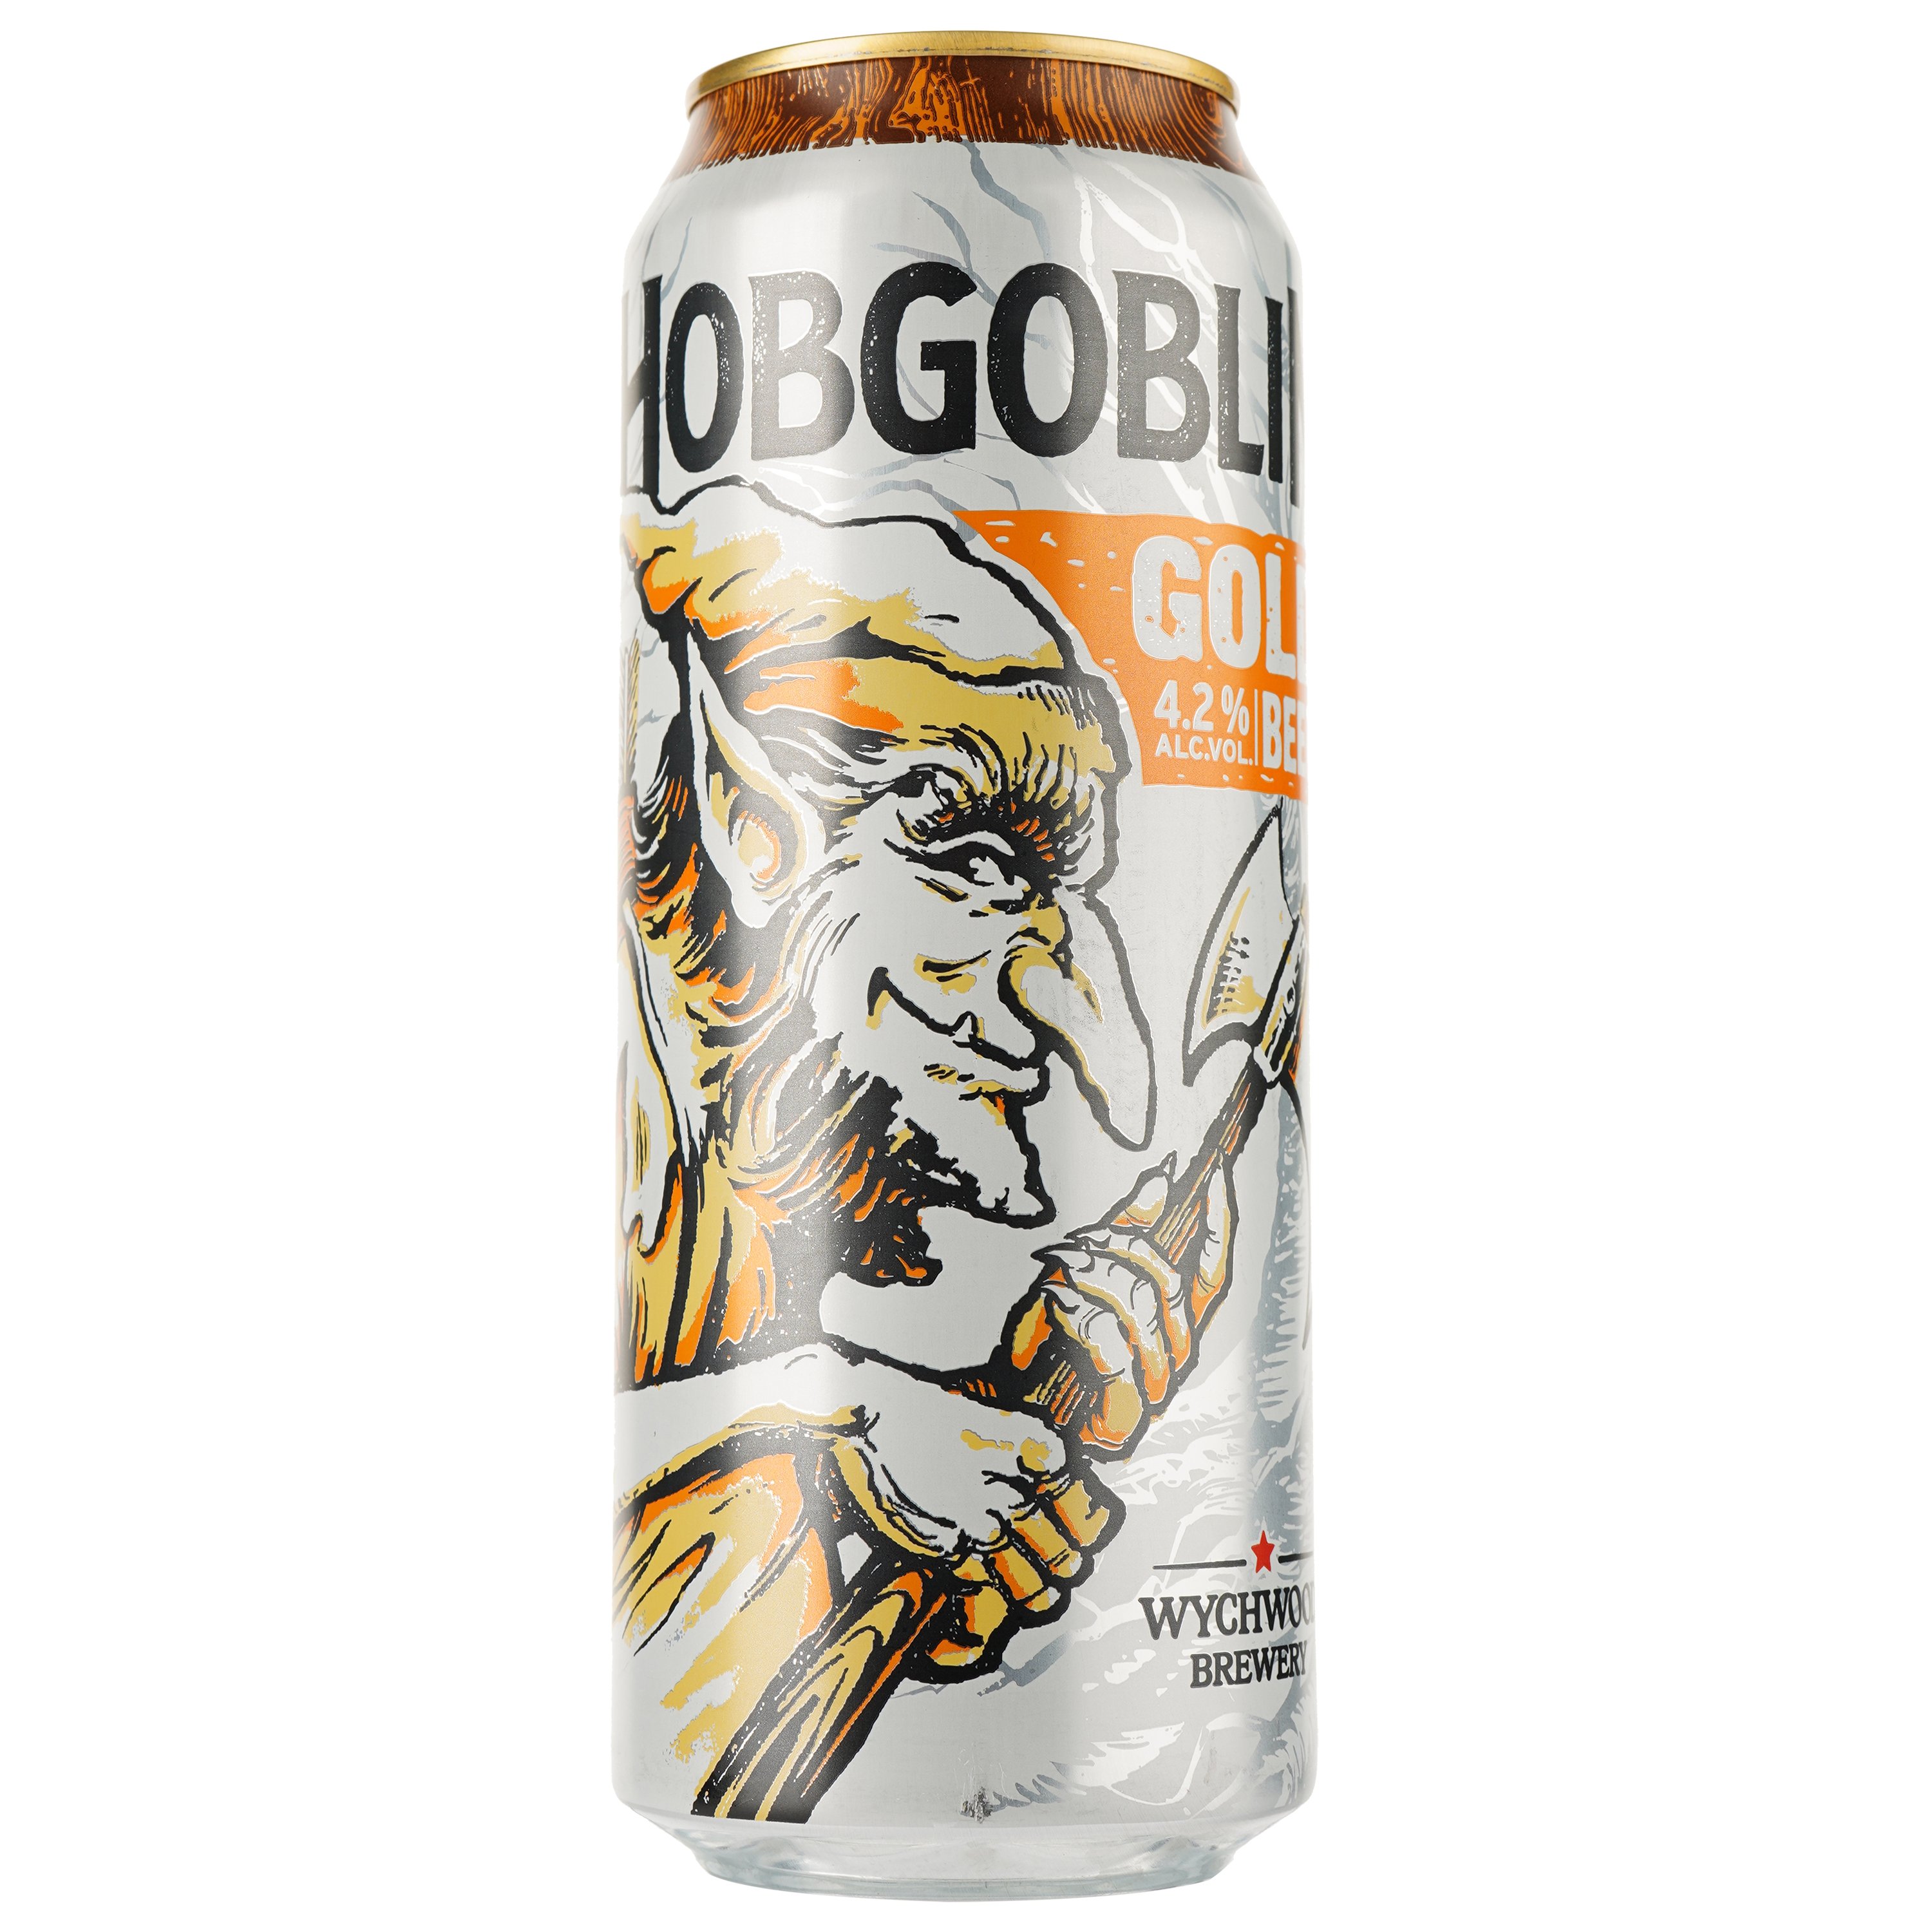 Пиво Wychwood Brewery Hobgoblin Gold світле 4.2% 0.5 л з/б - фото 1